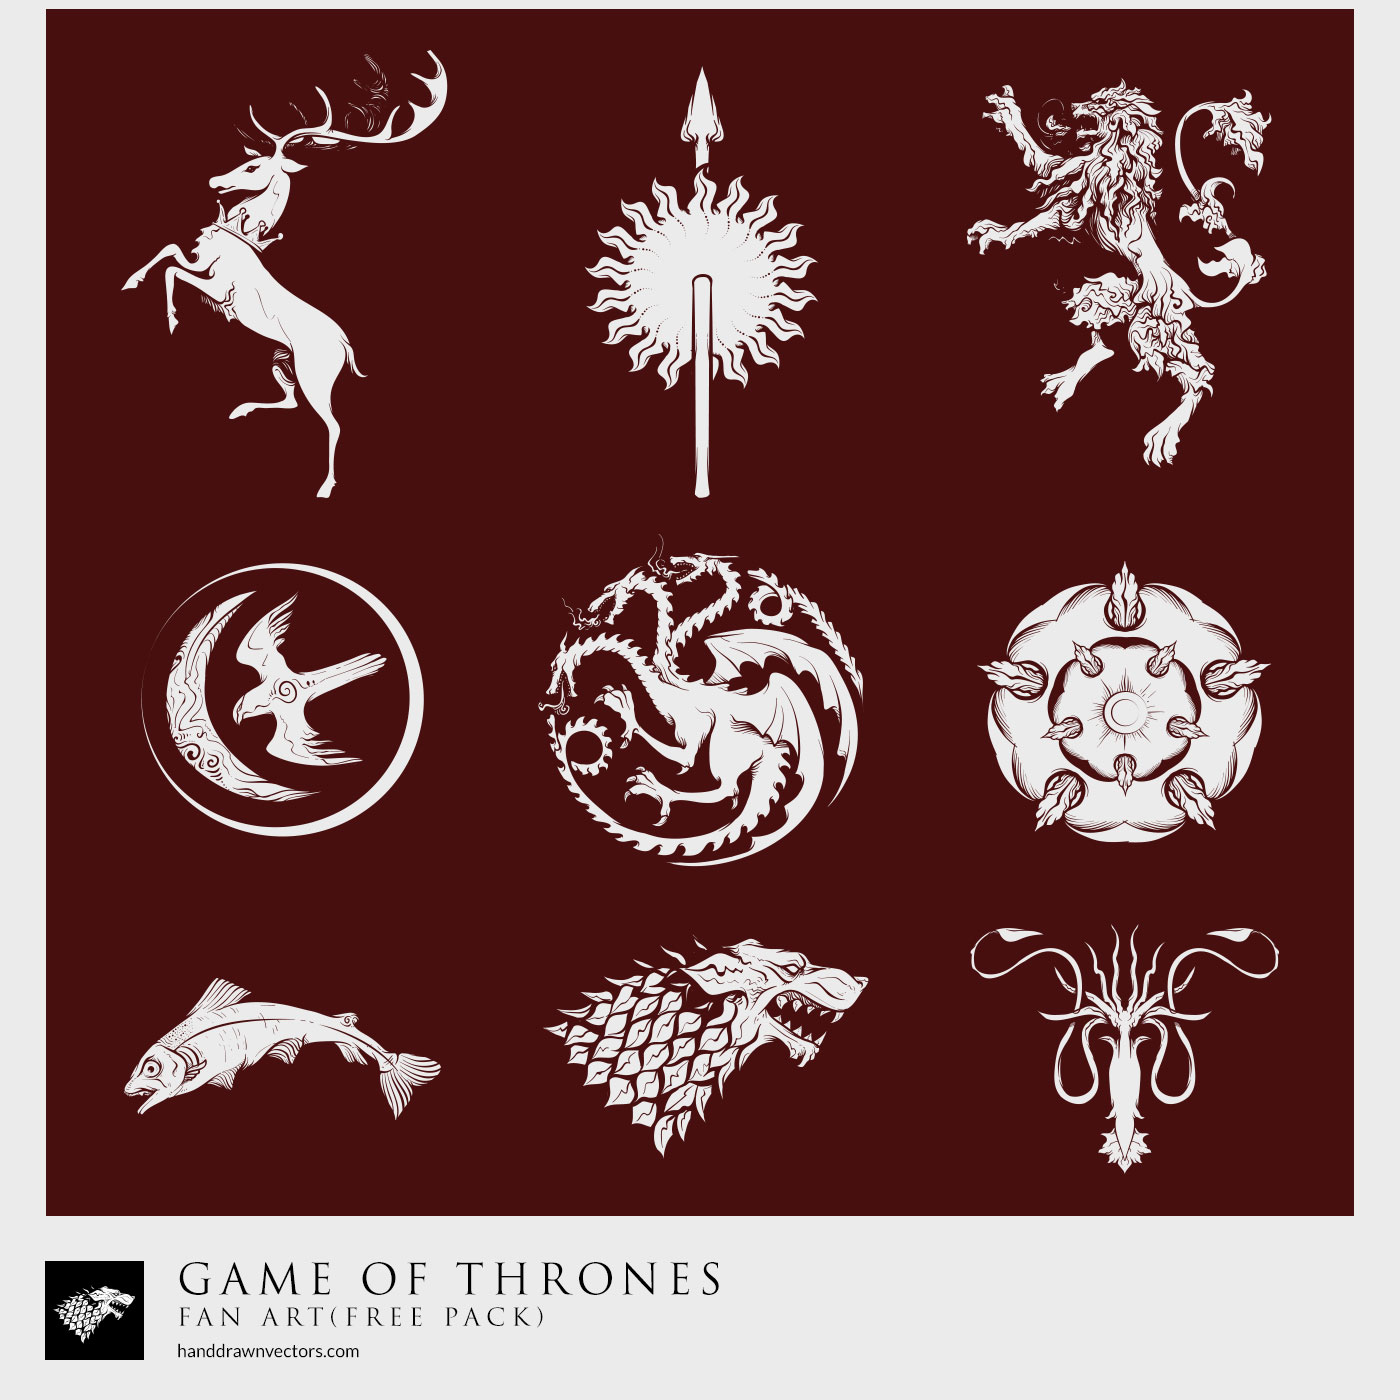 Game of thrones logo free